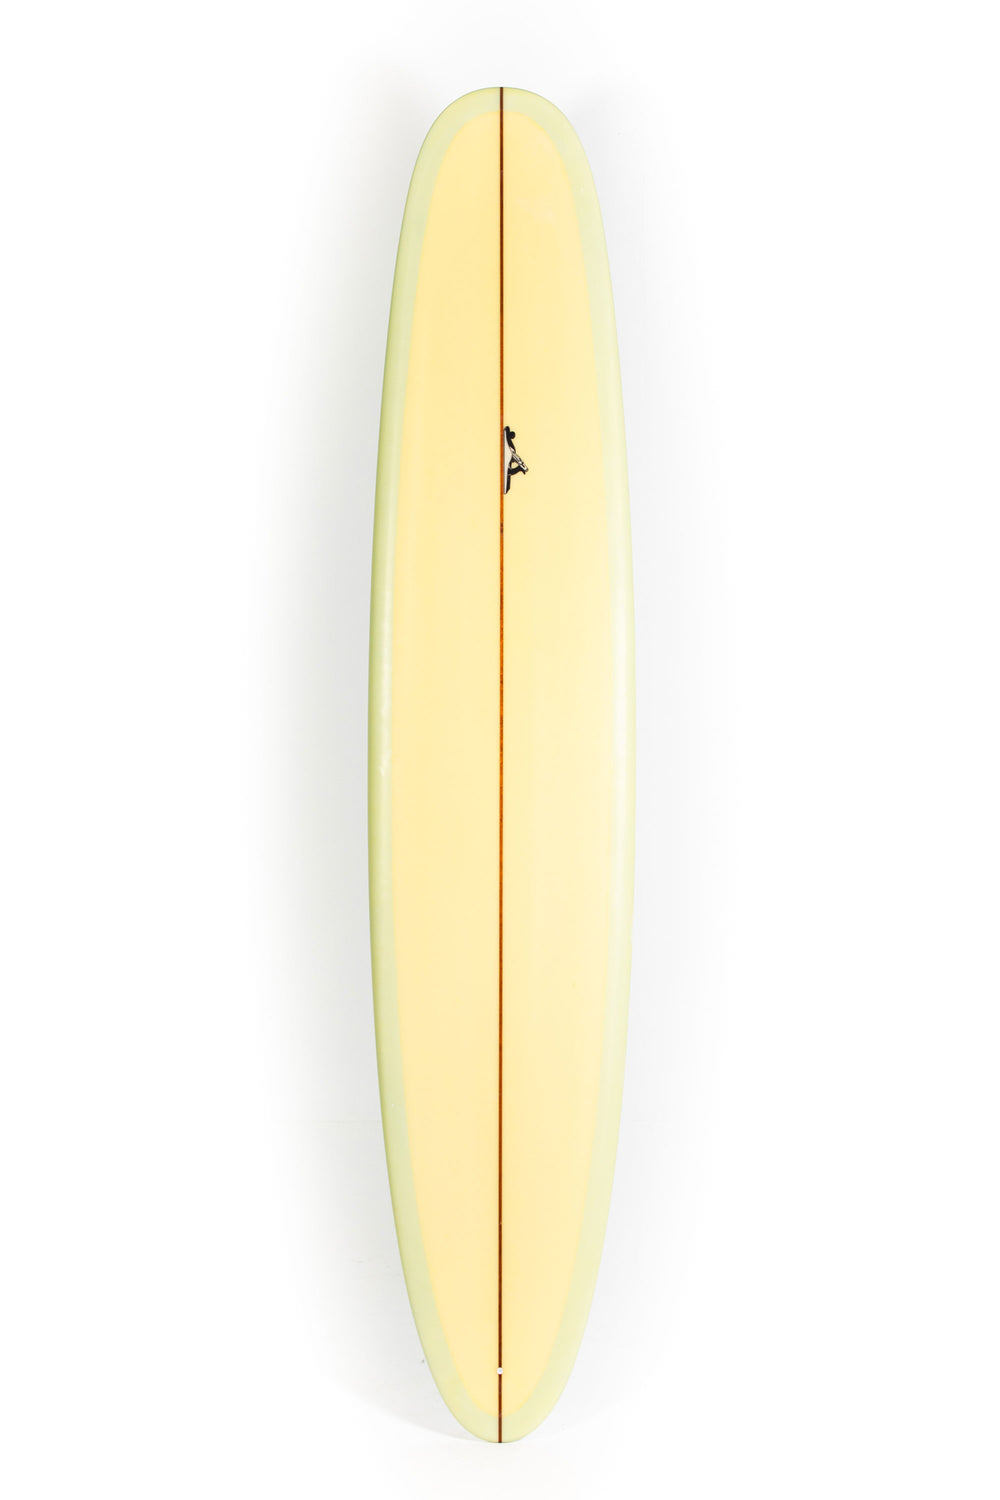 Pukas Surf Shop - Thomas Surfboards - WIZL - 9'4